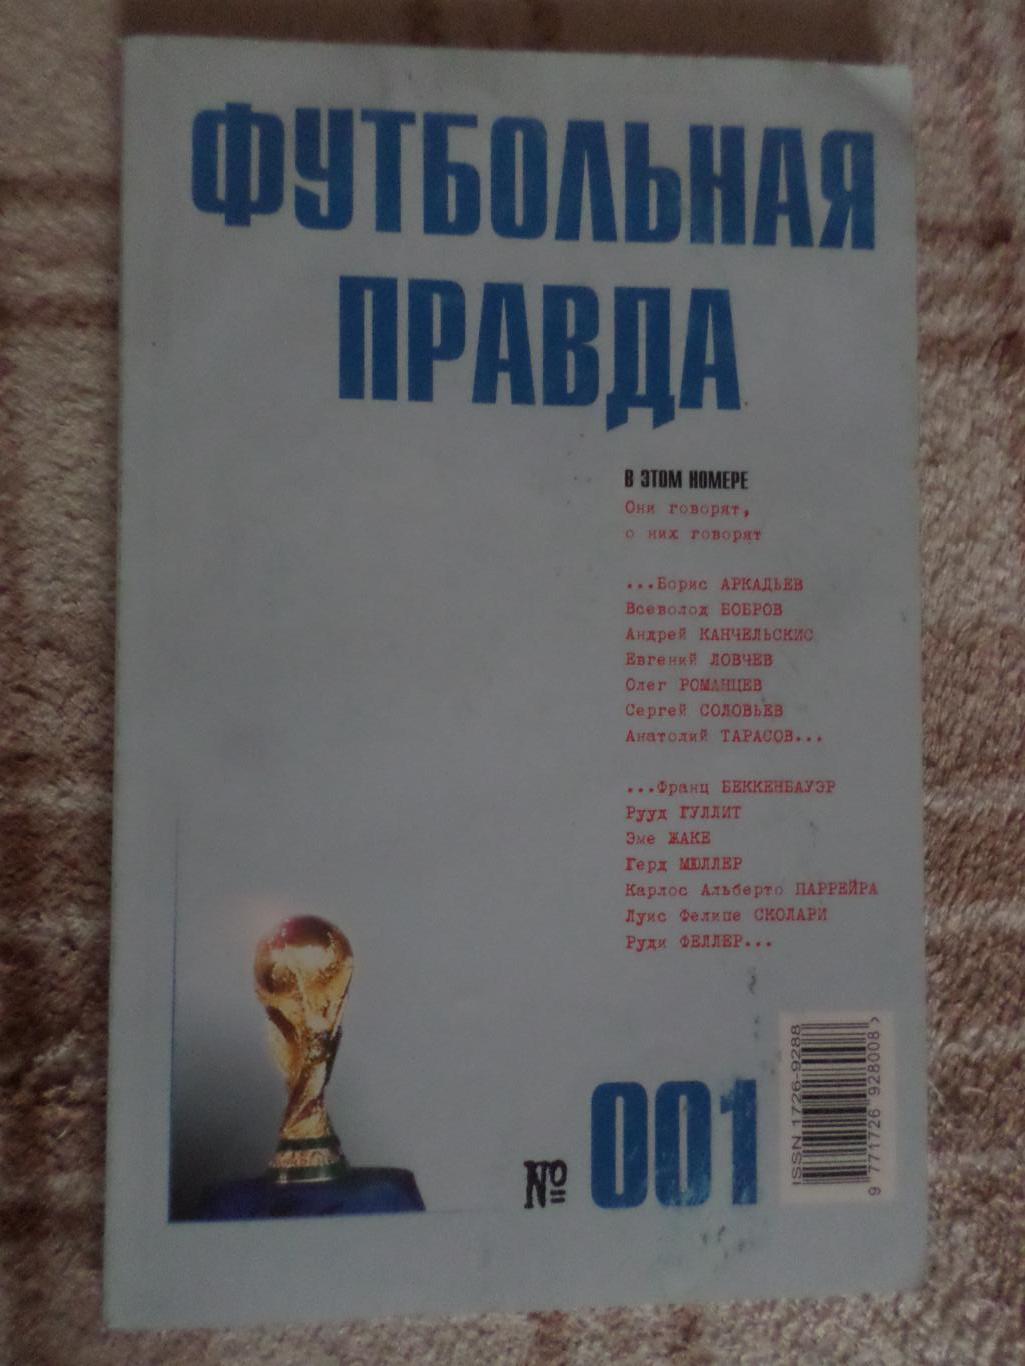 альманах Футбольная правда номер 1 март 2003 г